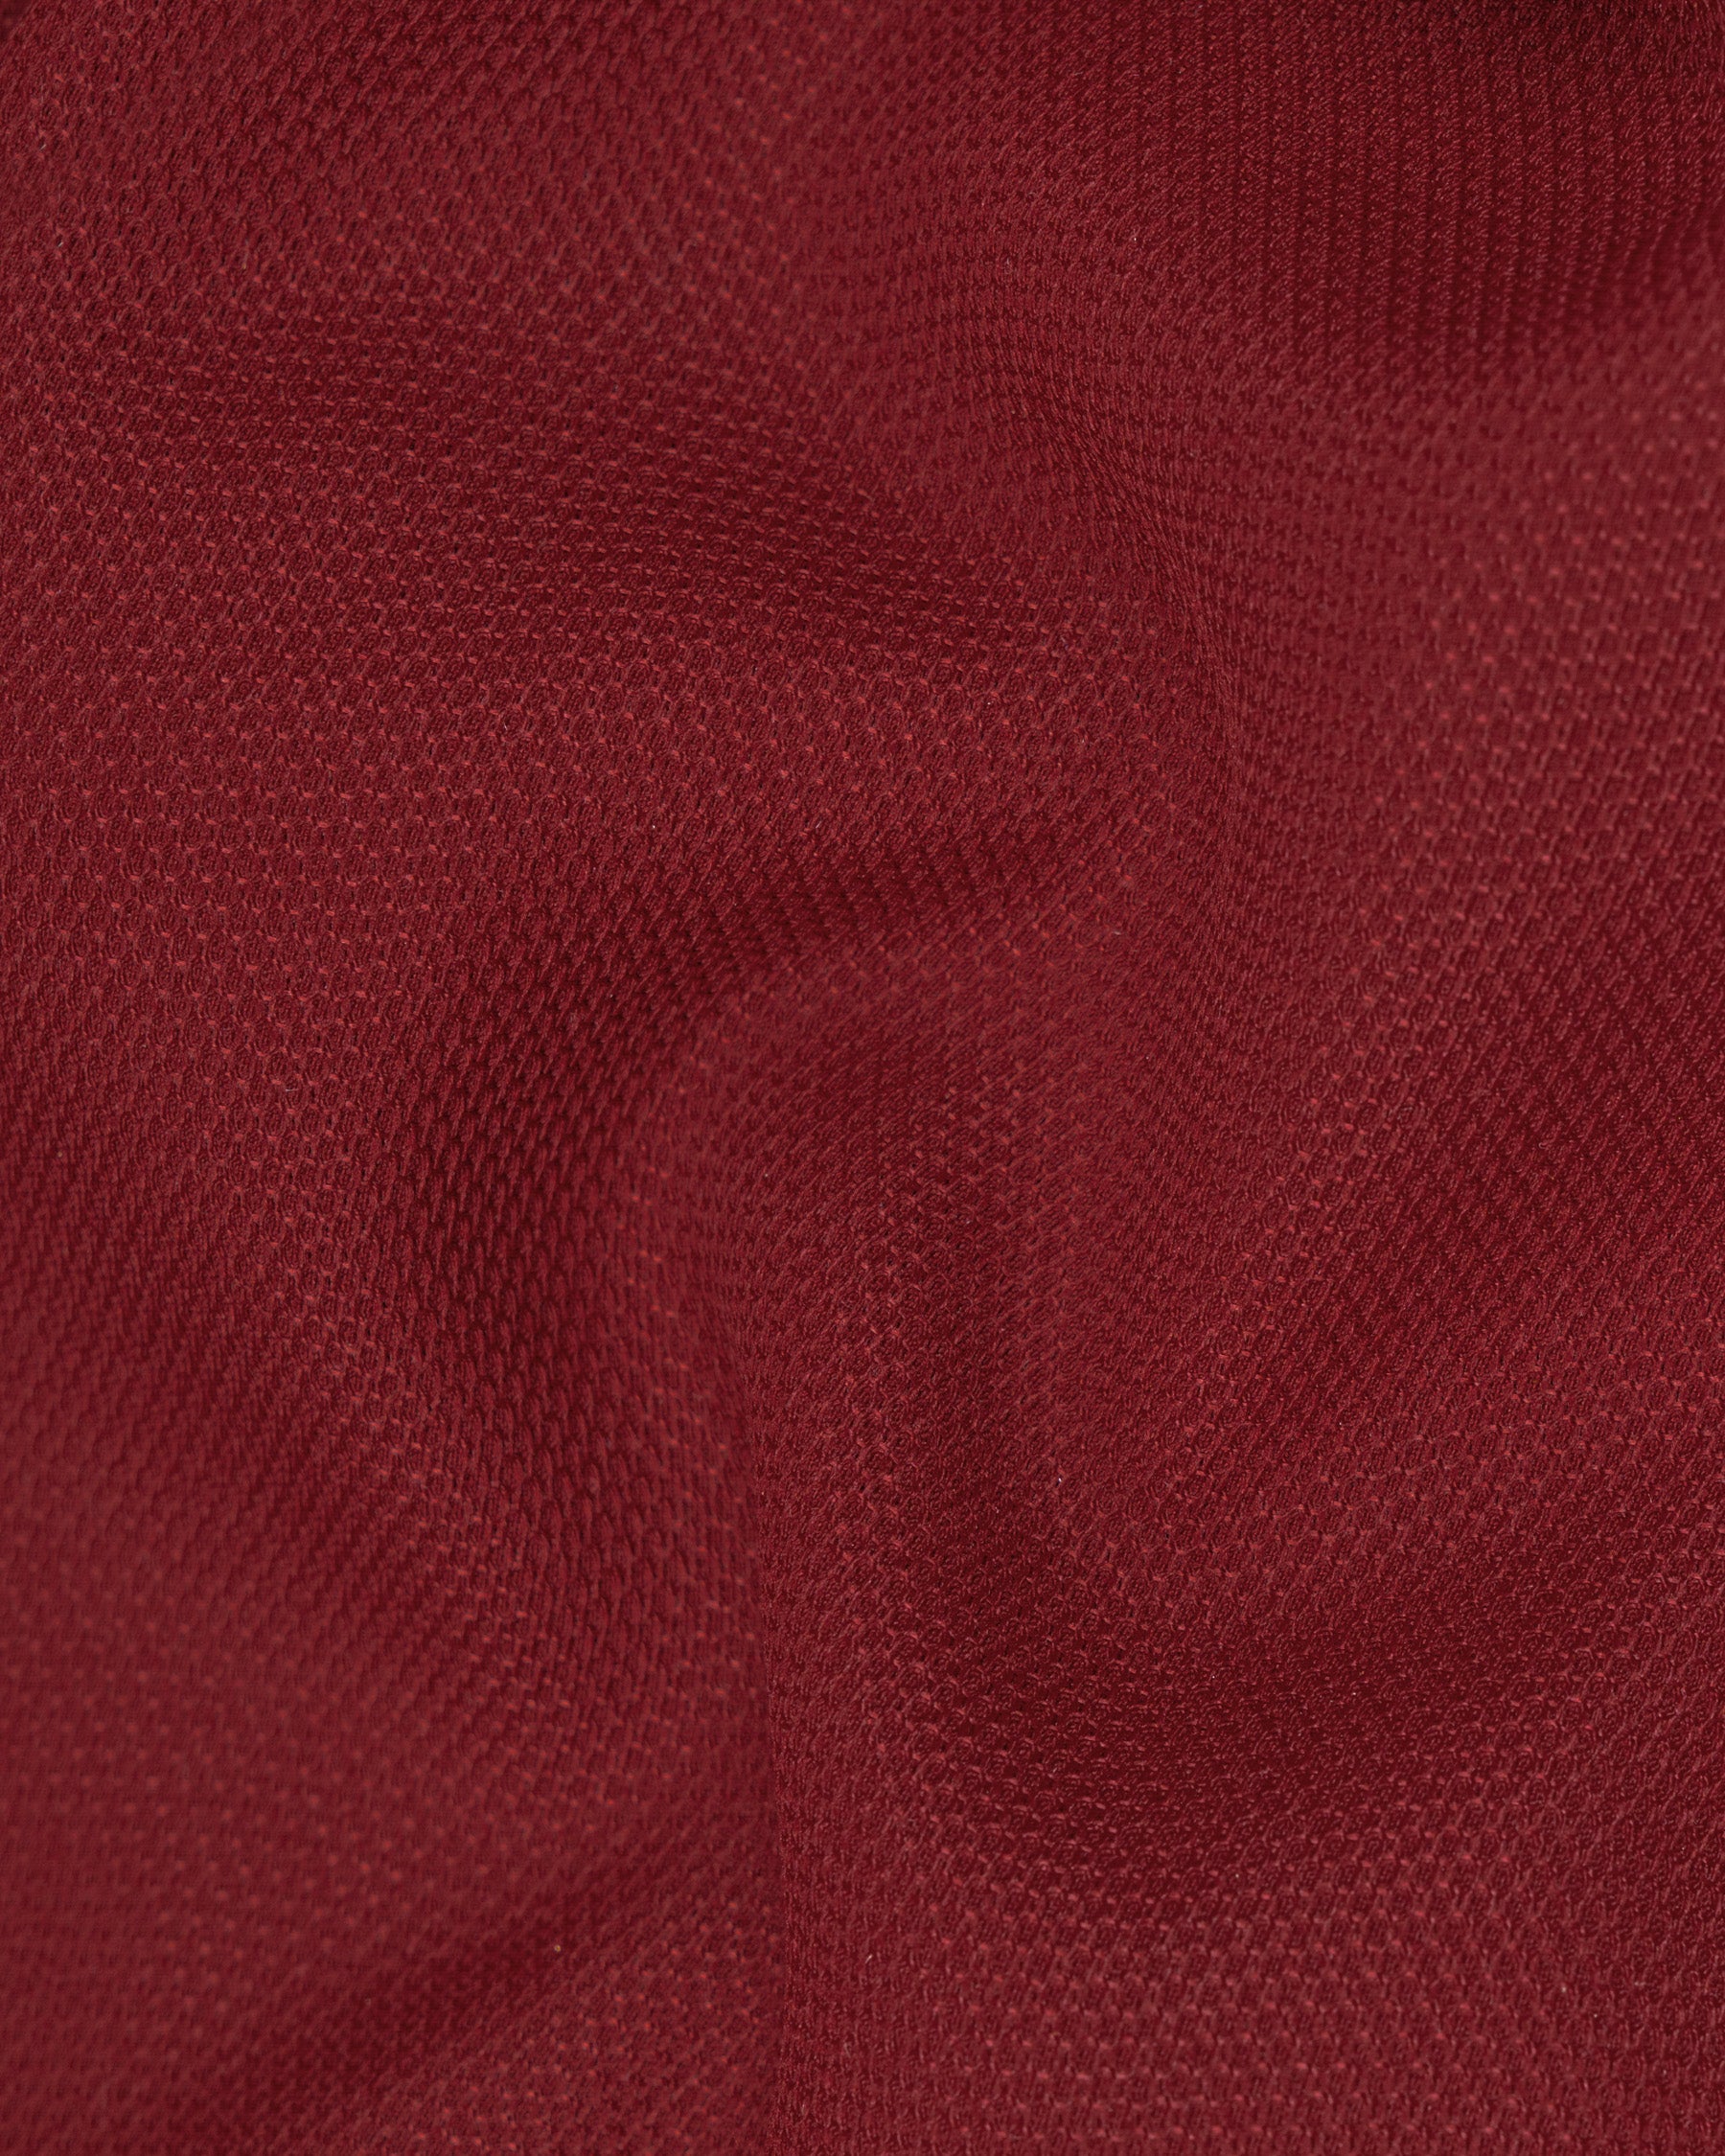 Mochaccino Red Textured Nehru Jacket WC1673-36, WC1673-38, WC1673-40, WC1673-42, WC1673-44, WC1673-46, WC1673-48, WC1673-50, WC1673-52, WC1673-54, WC1673-56, WC1673-58, WC1673-60